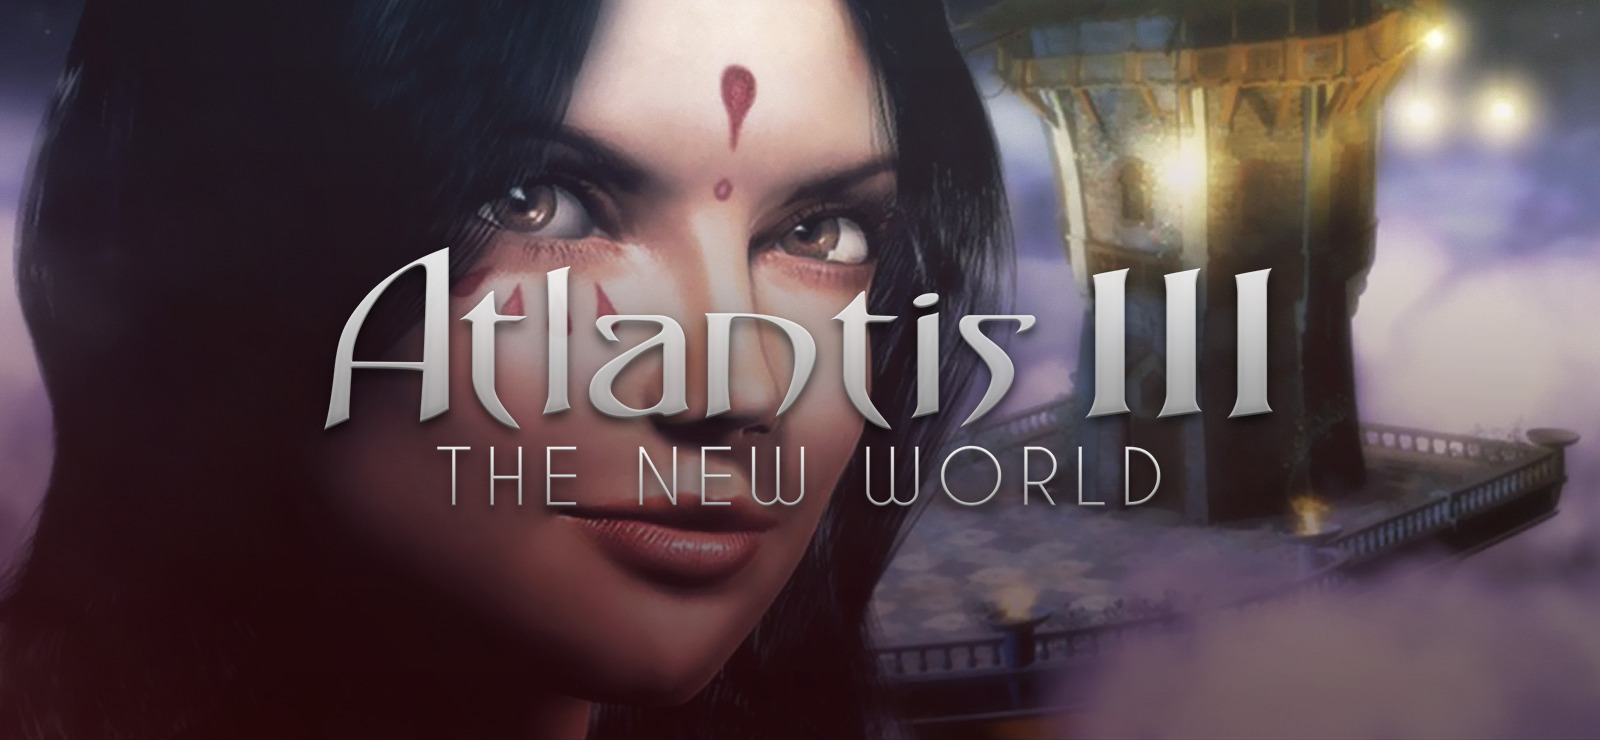 Atlantis 3. Atlantis 3 the New World. Atlantis 3 игра. Atlantis III the New World Cryo interactive.